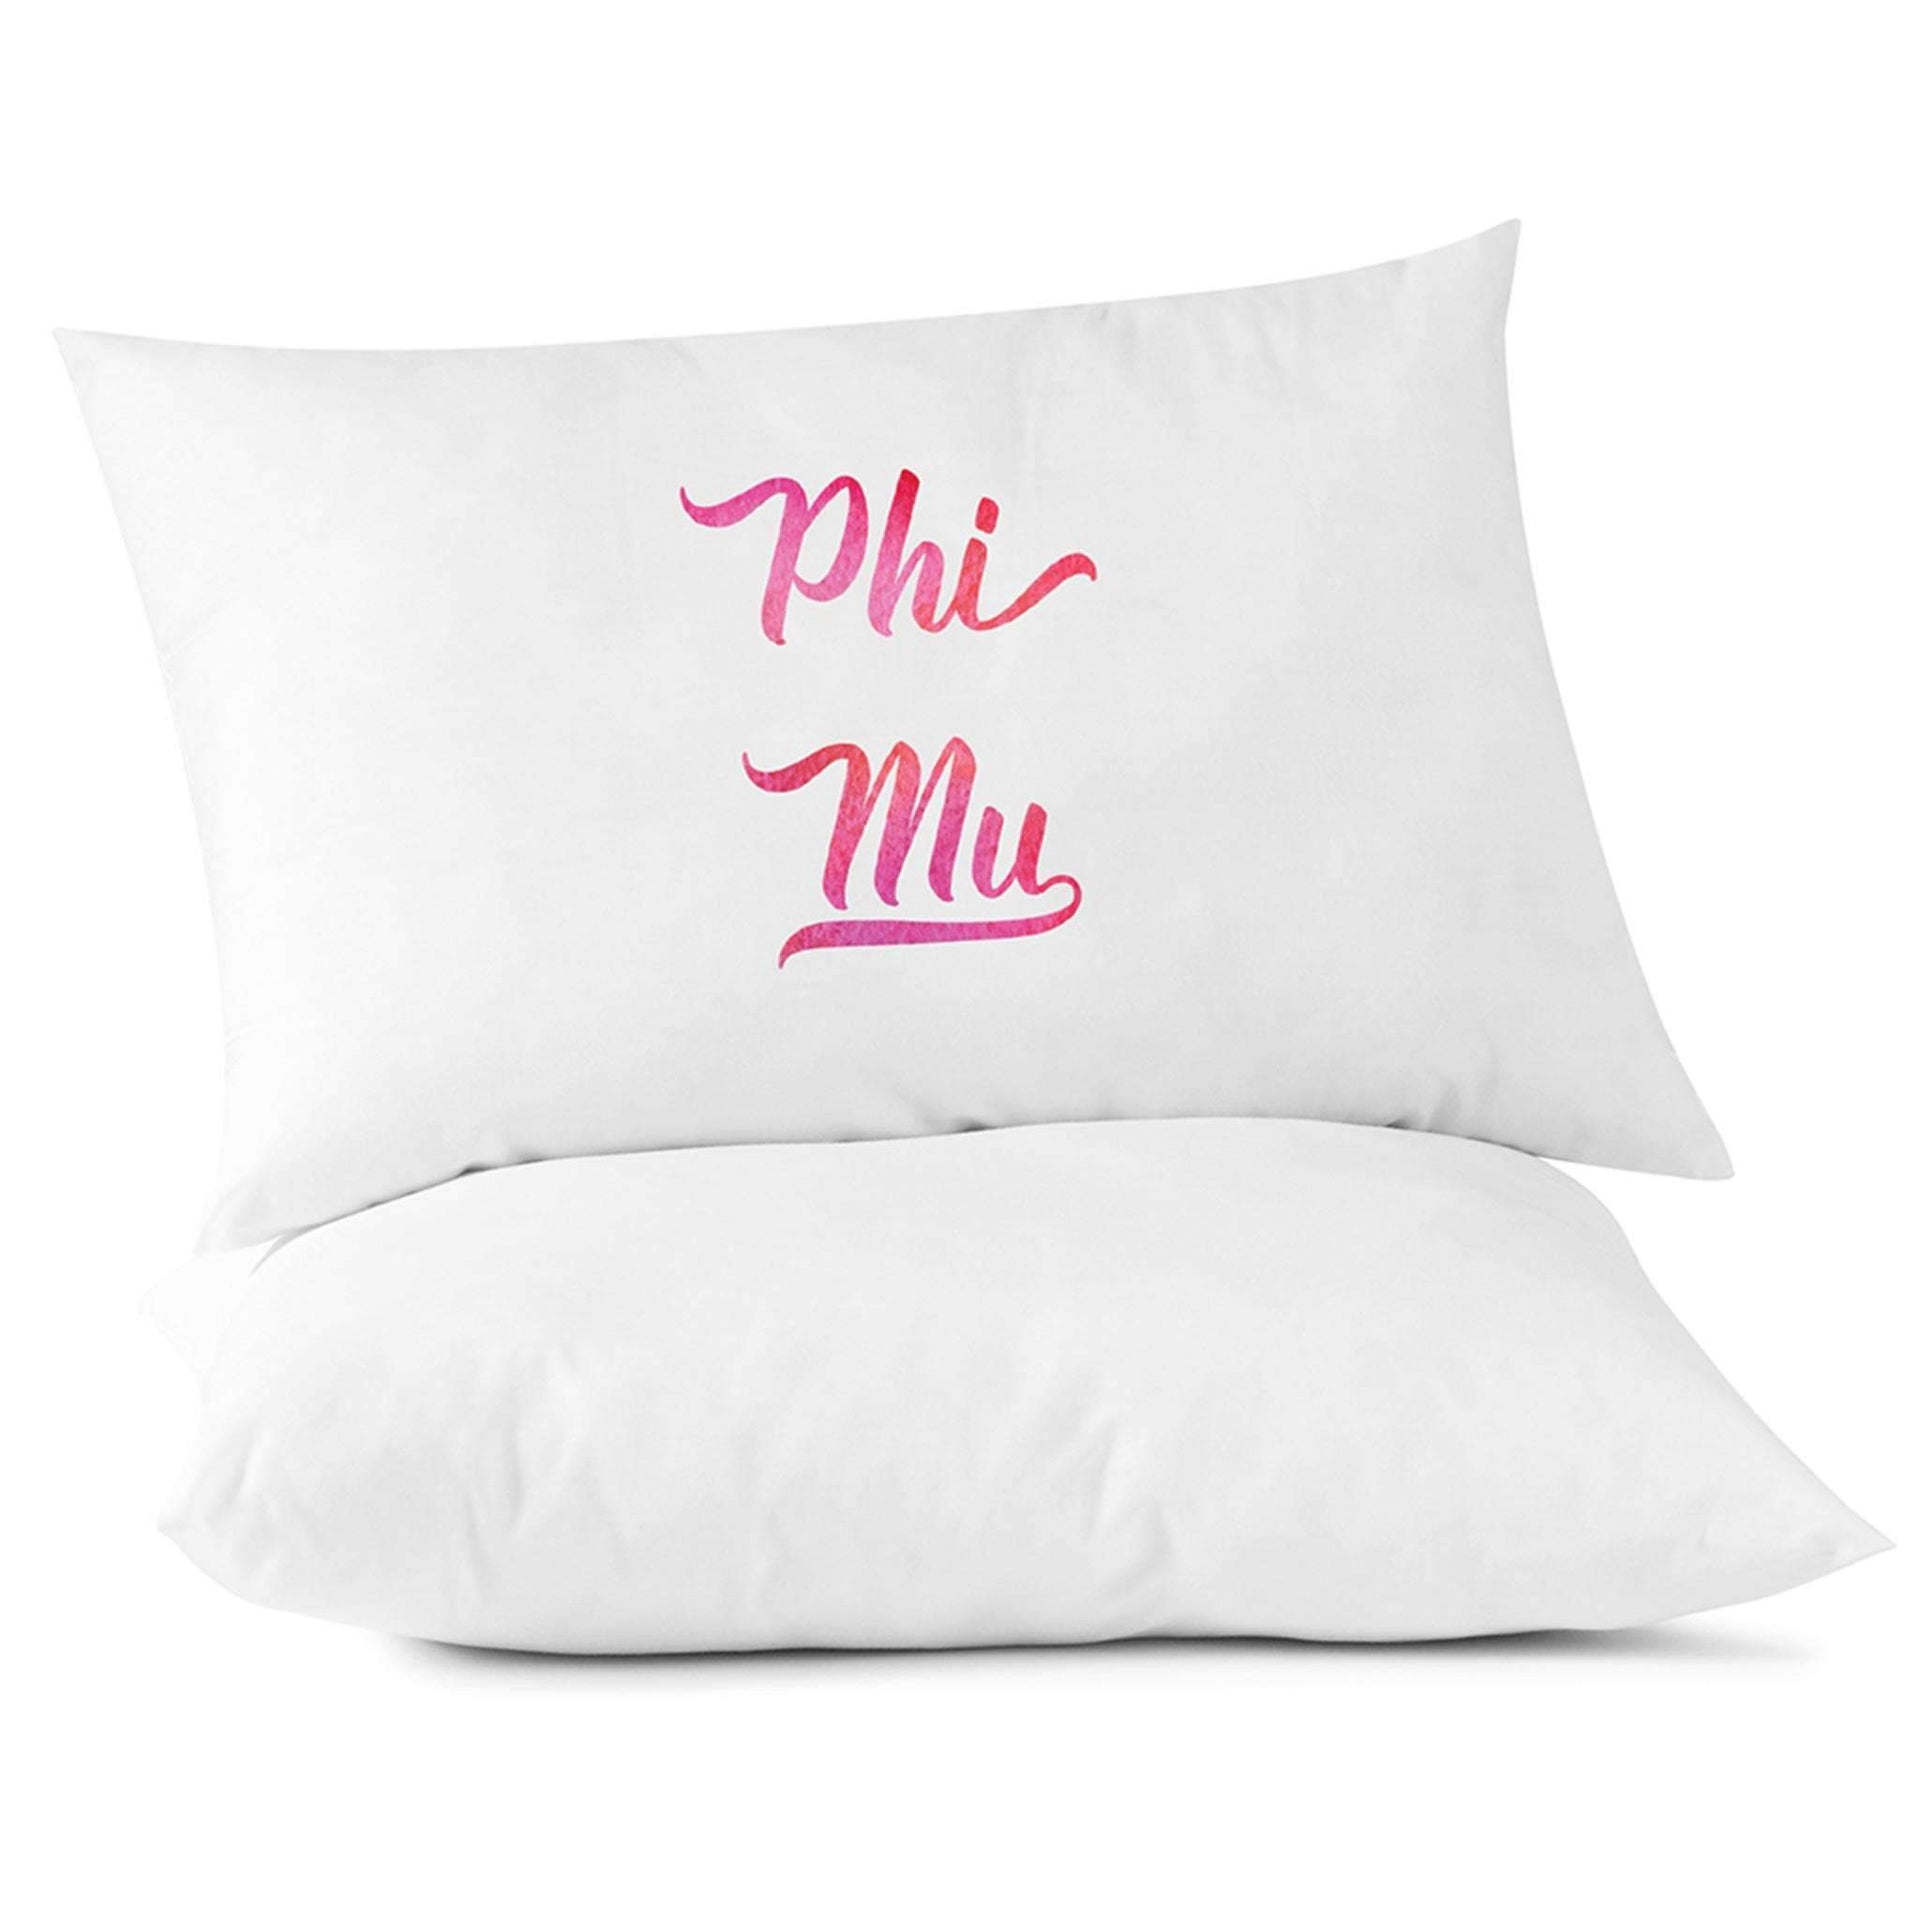 Phi Mu sorority name in handwriting custom printed in sorority colors on pillowcase.